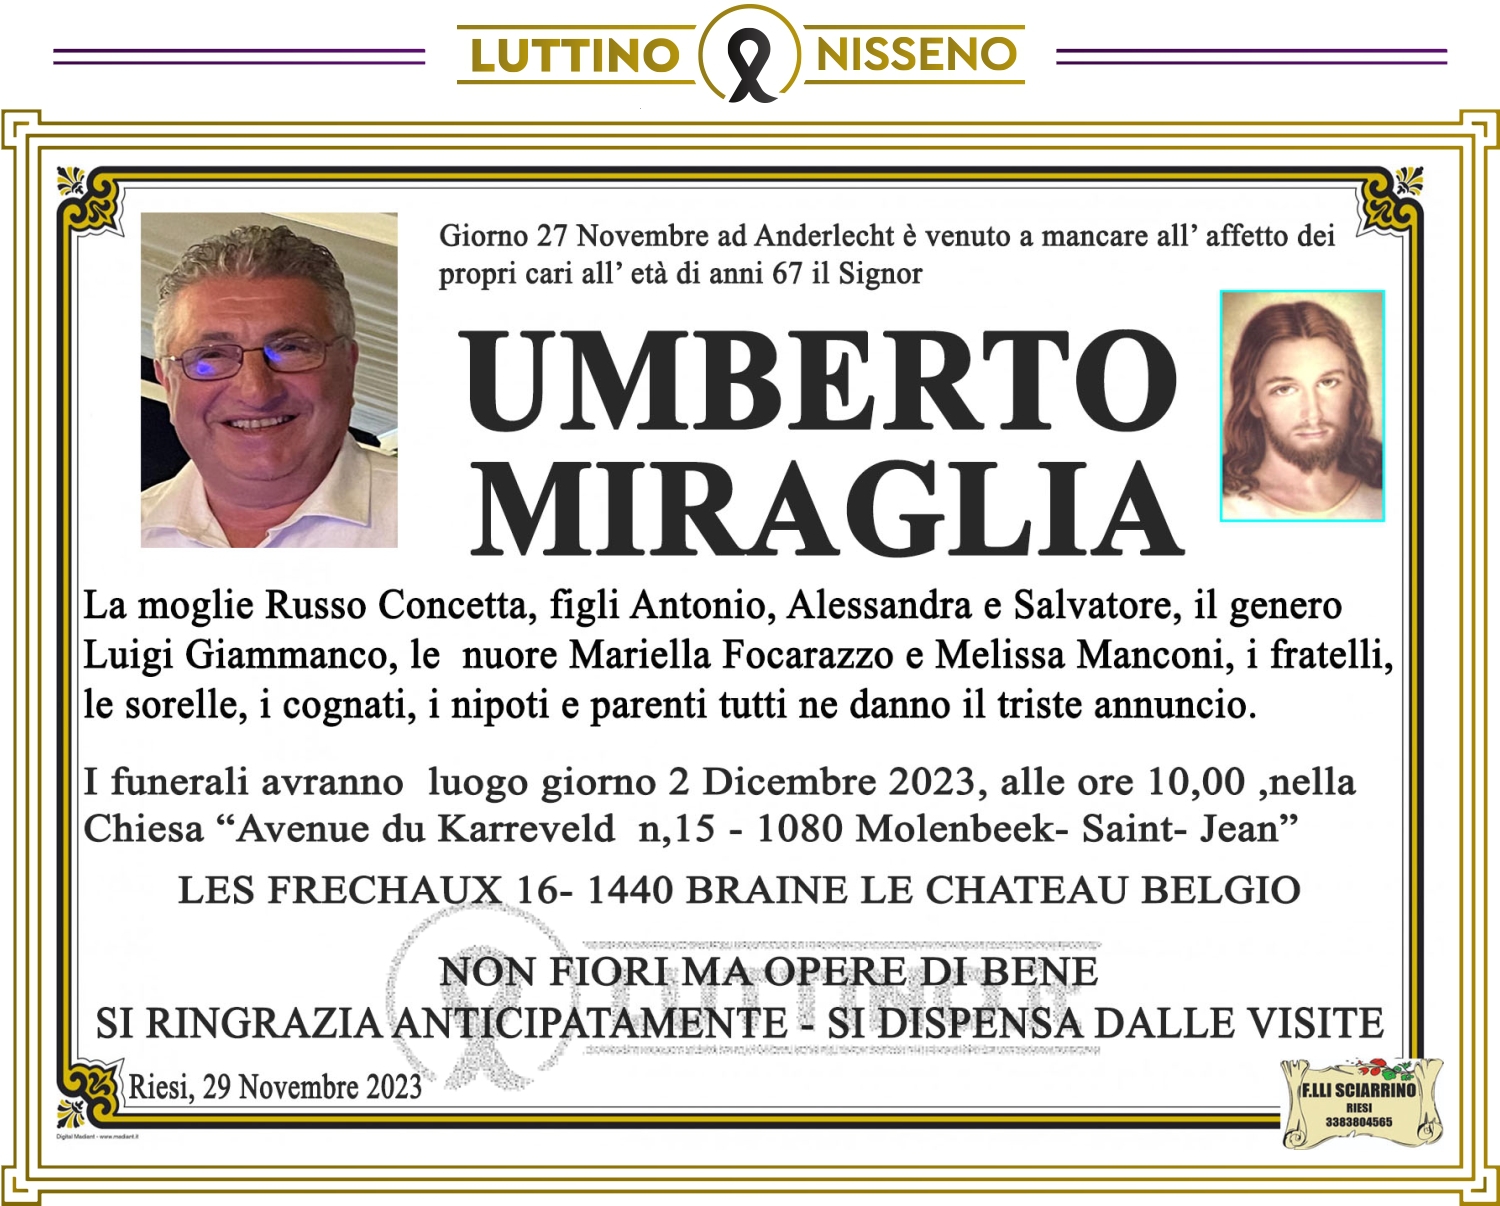 Umberto Miraglia